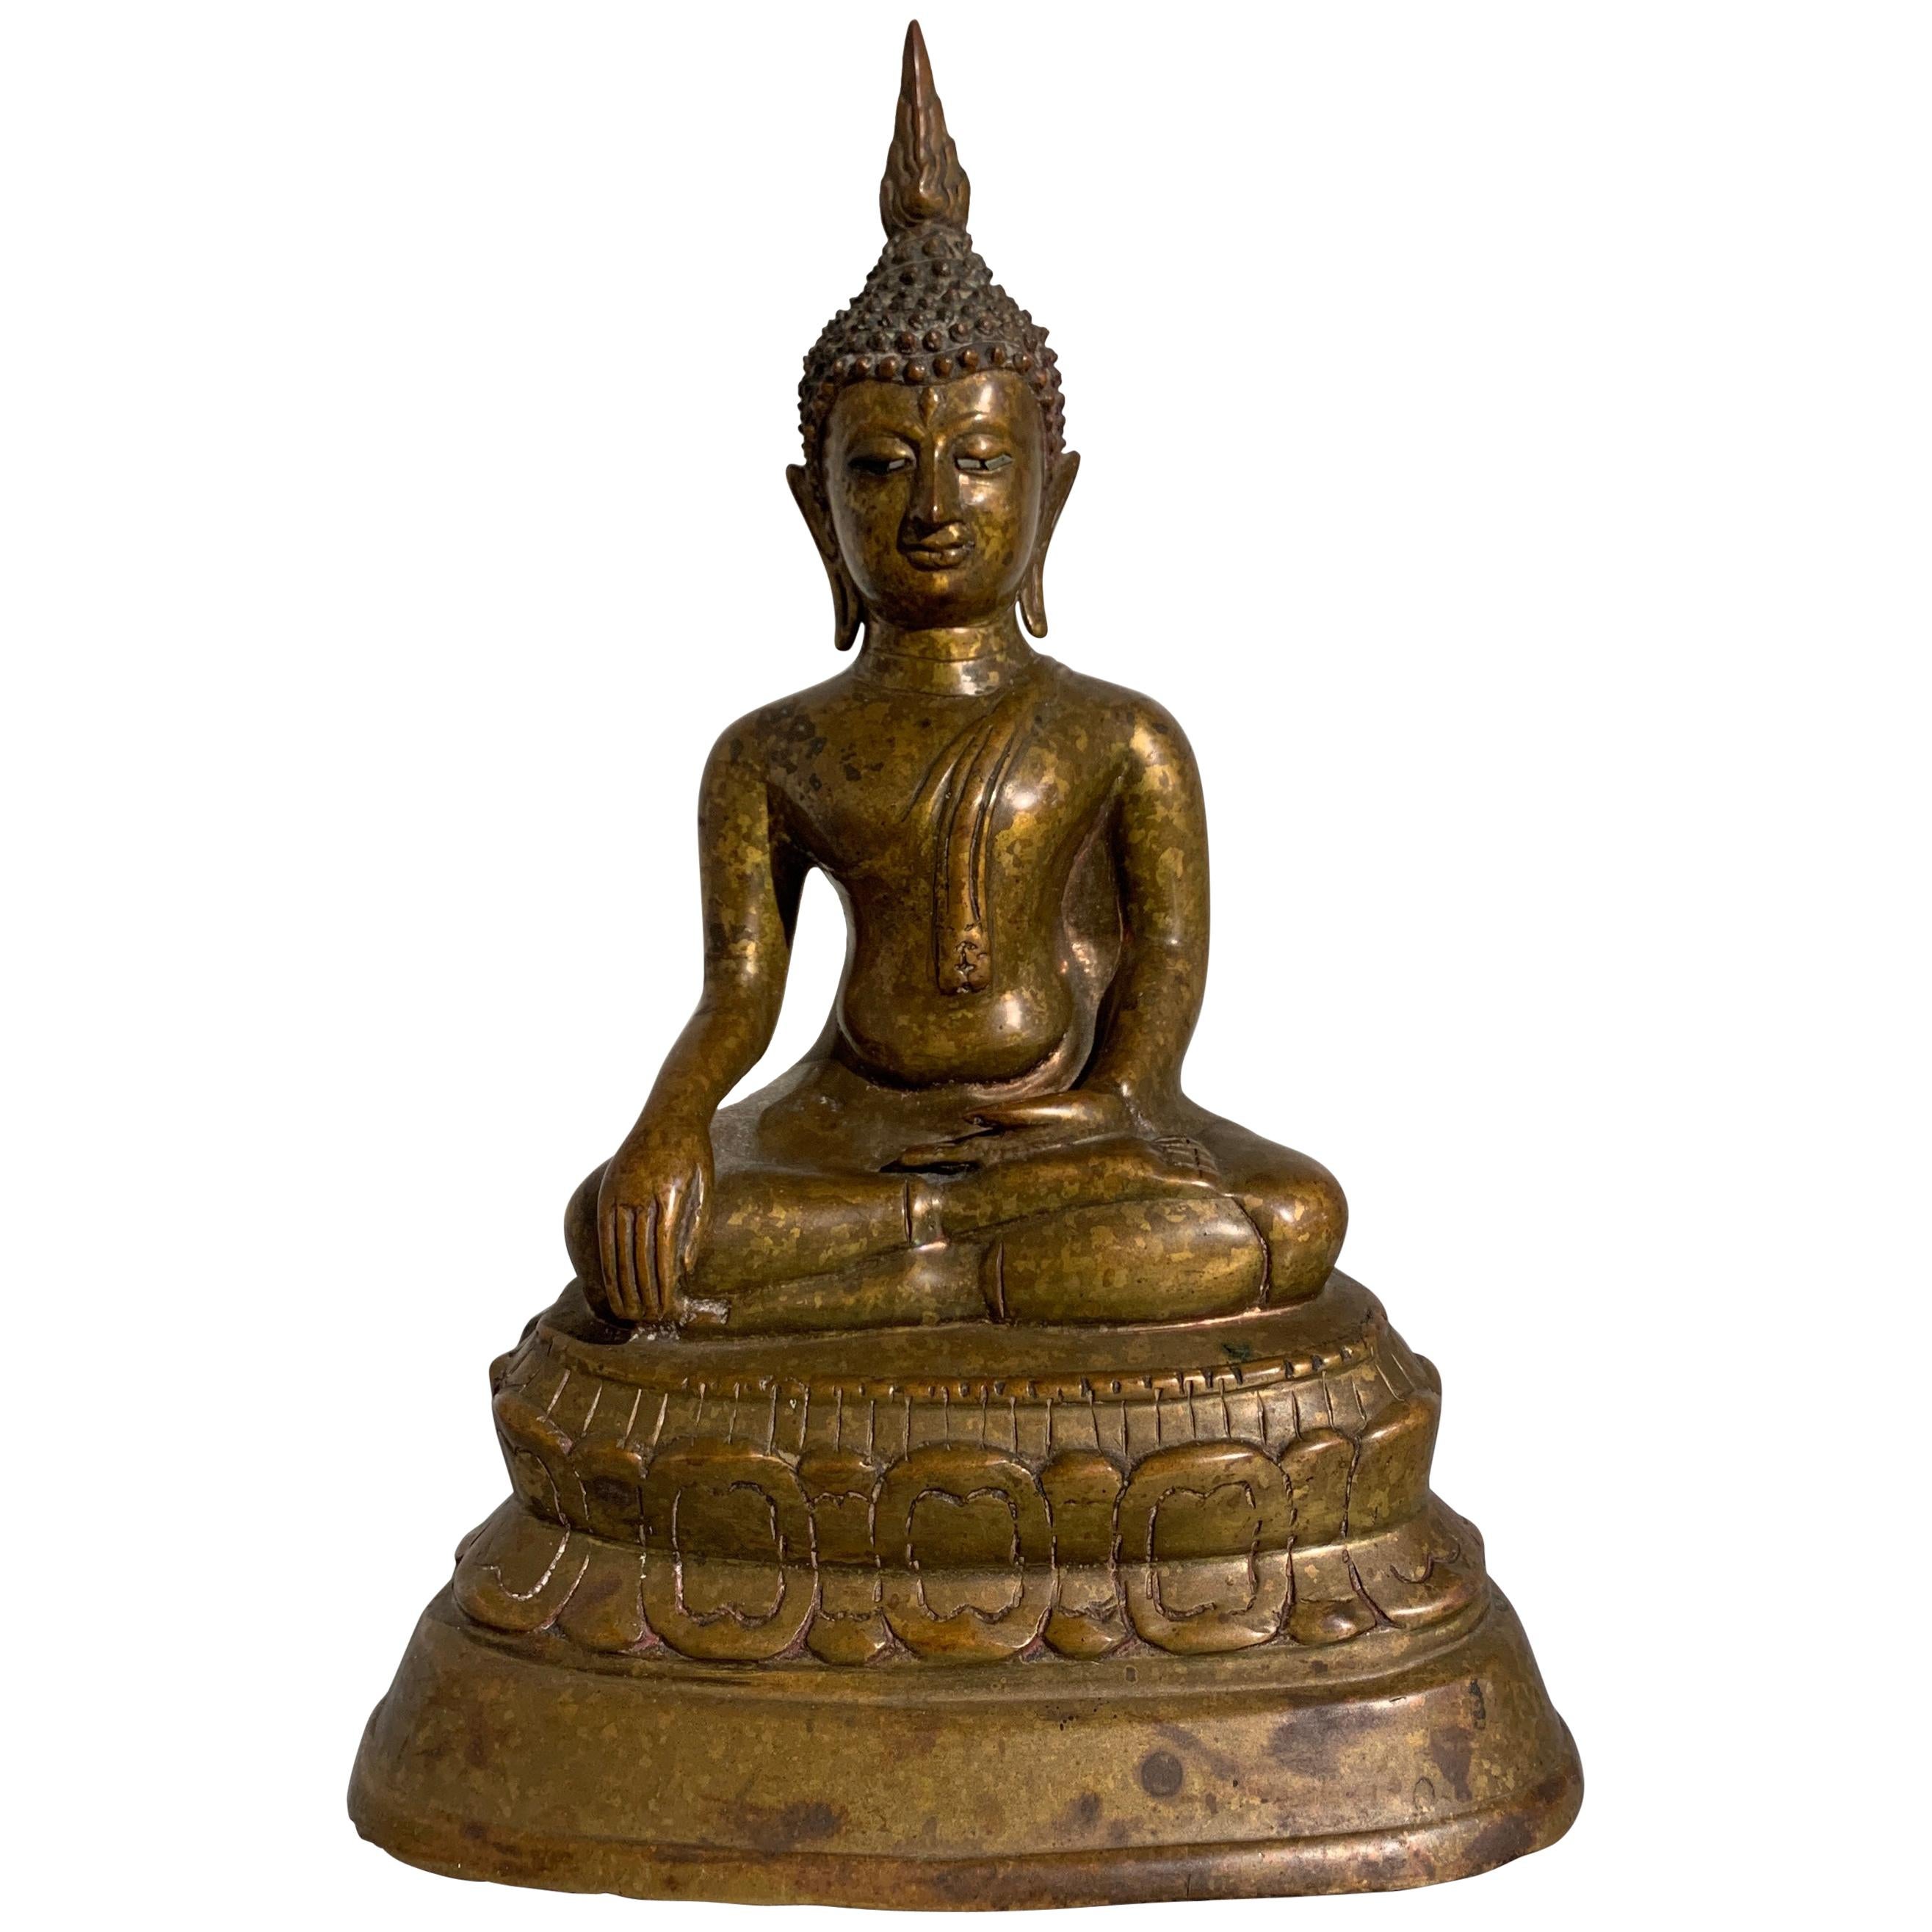 Bouddha assis en bronze doré thaïlandais, Royaume de Lan Na, Chiang Mai, fin du 15e siècle